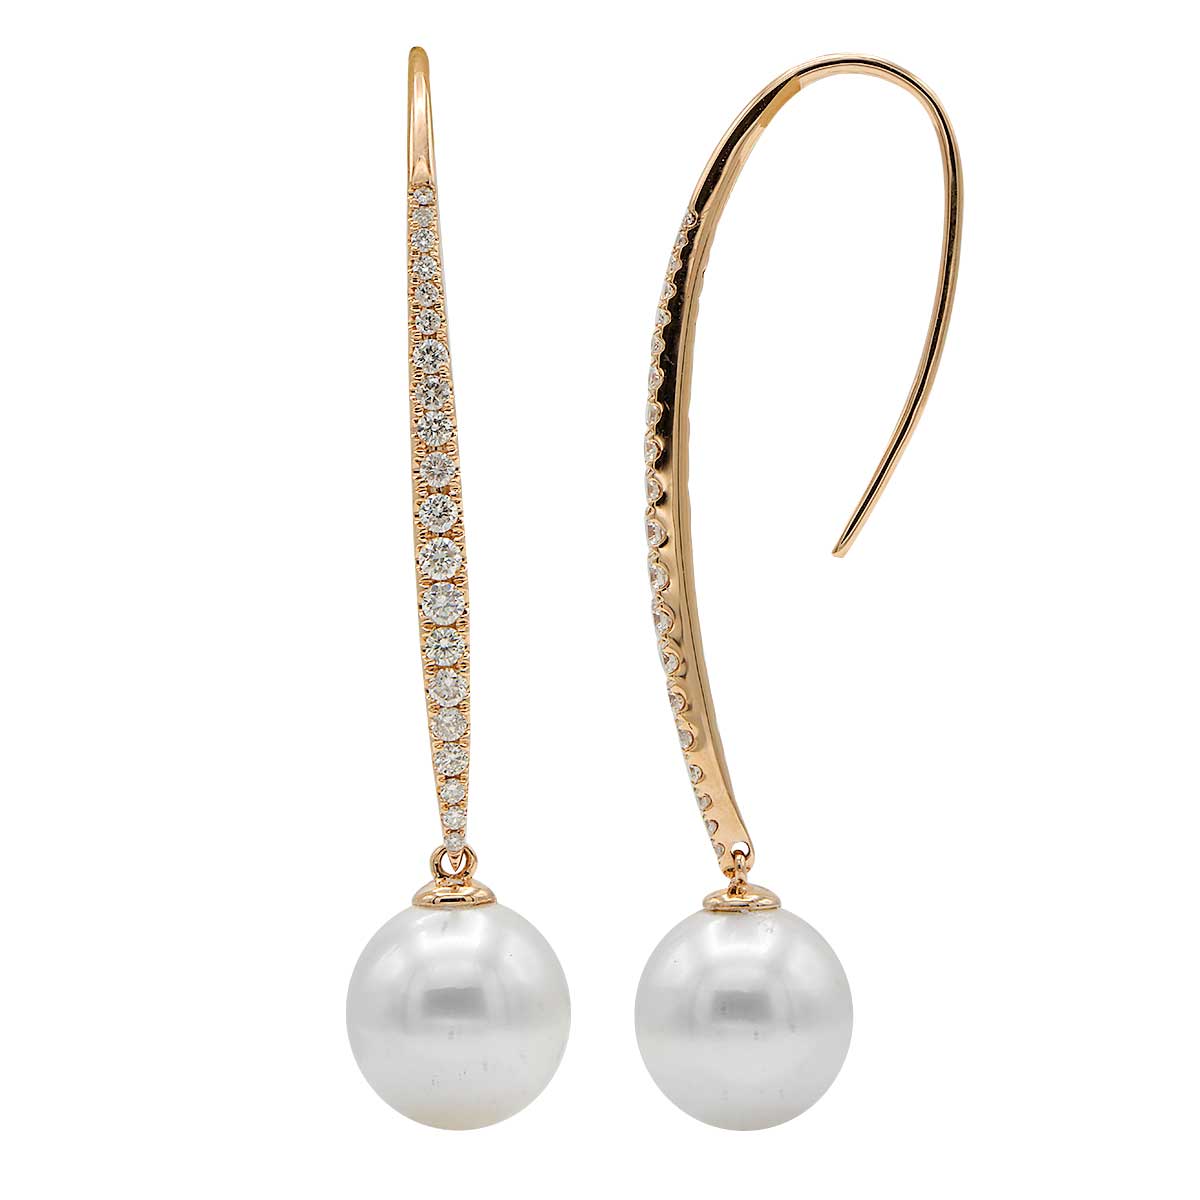 18KR White South Sea Pearl Earrings, 10-11mm